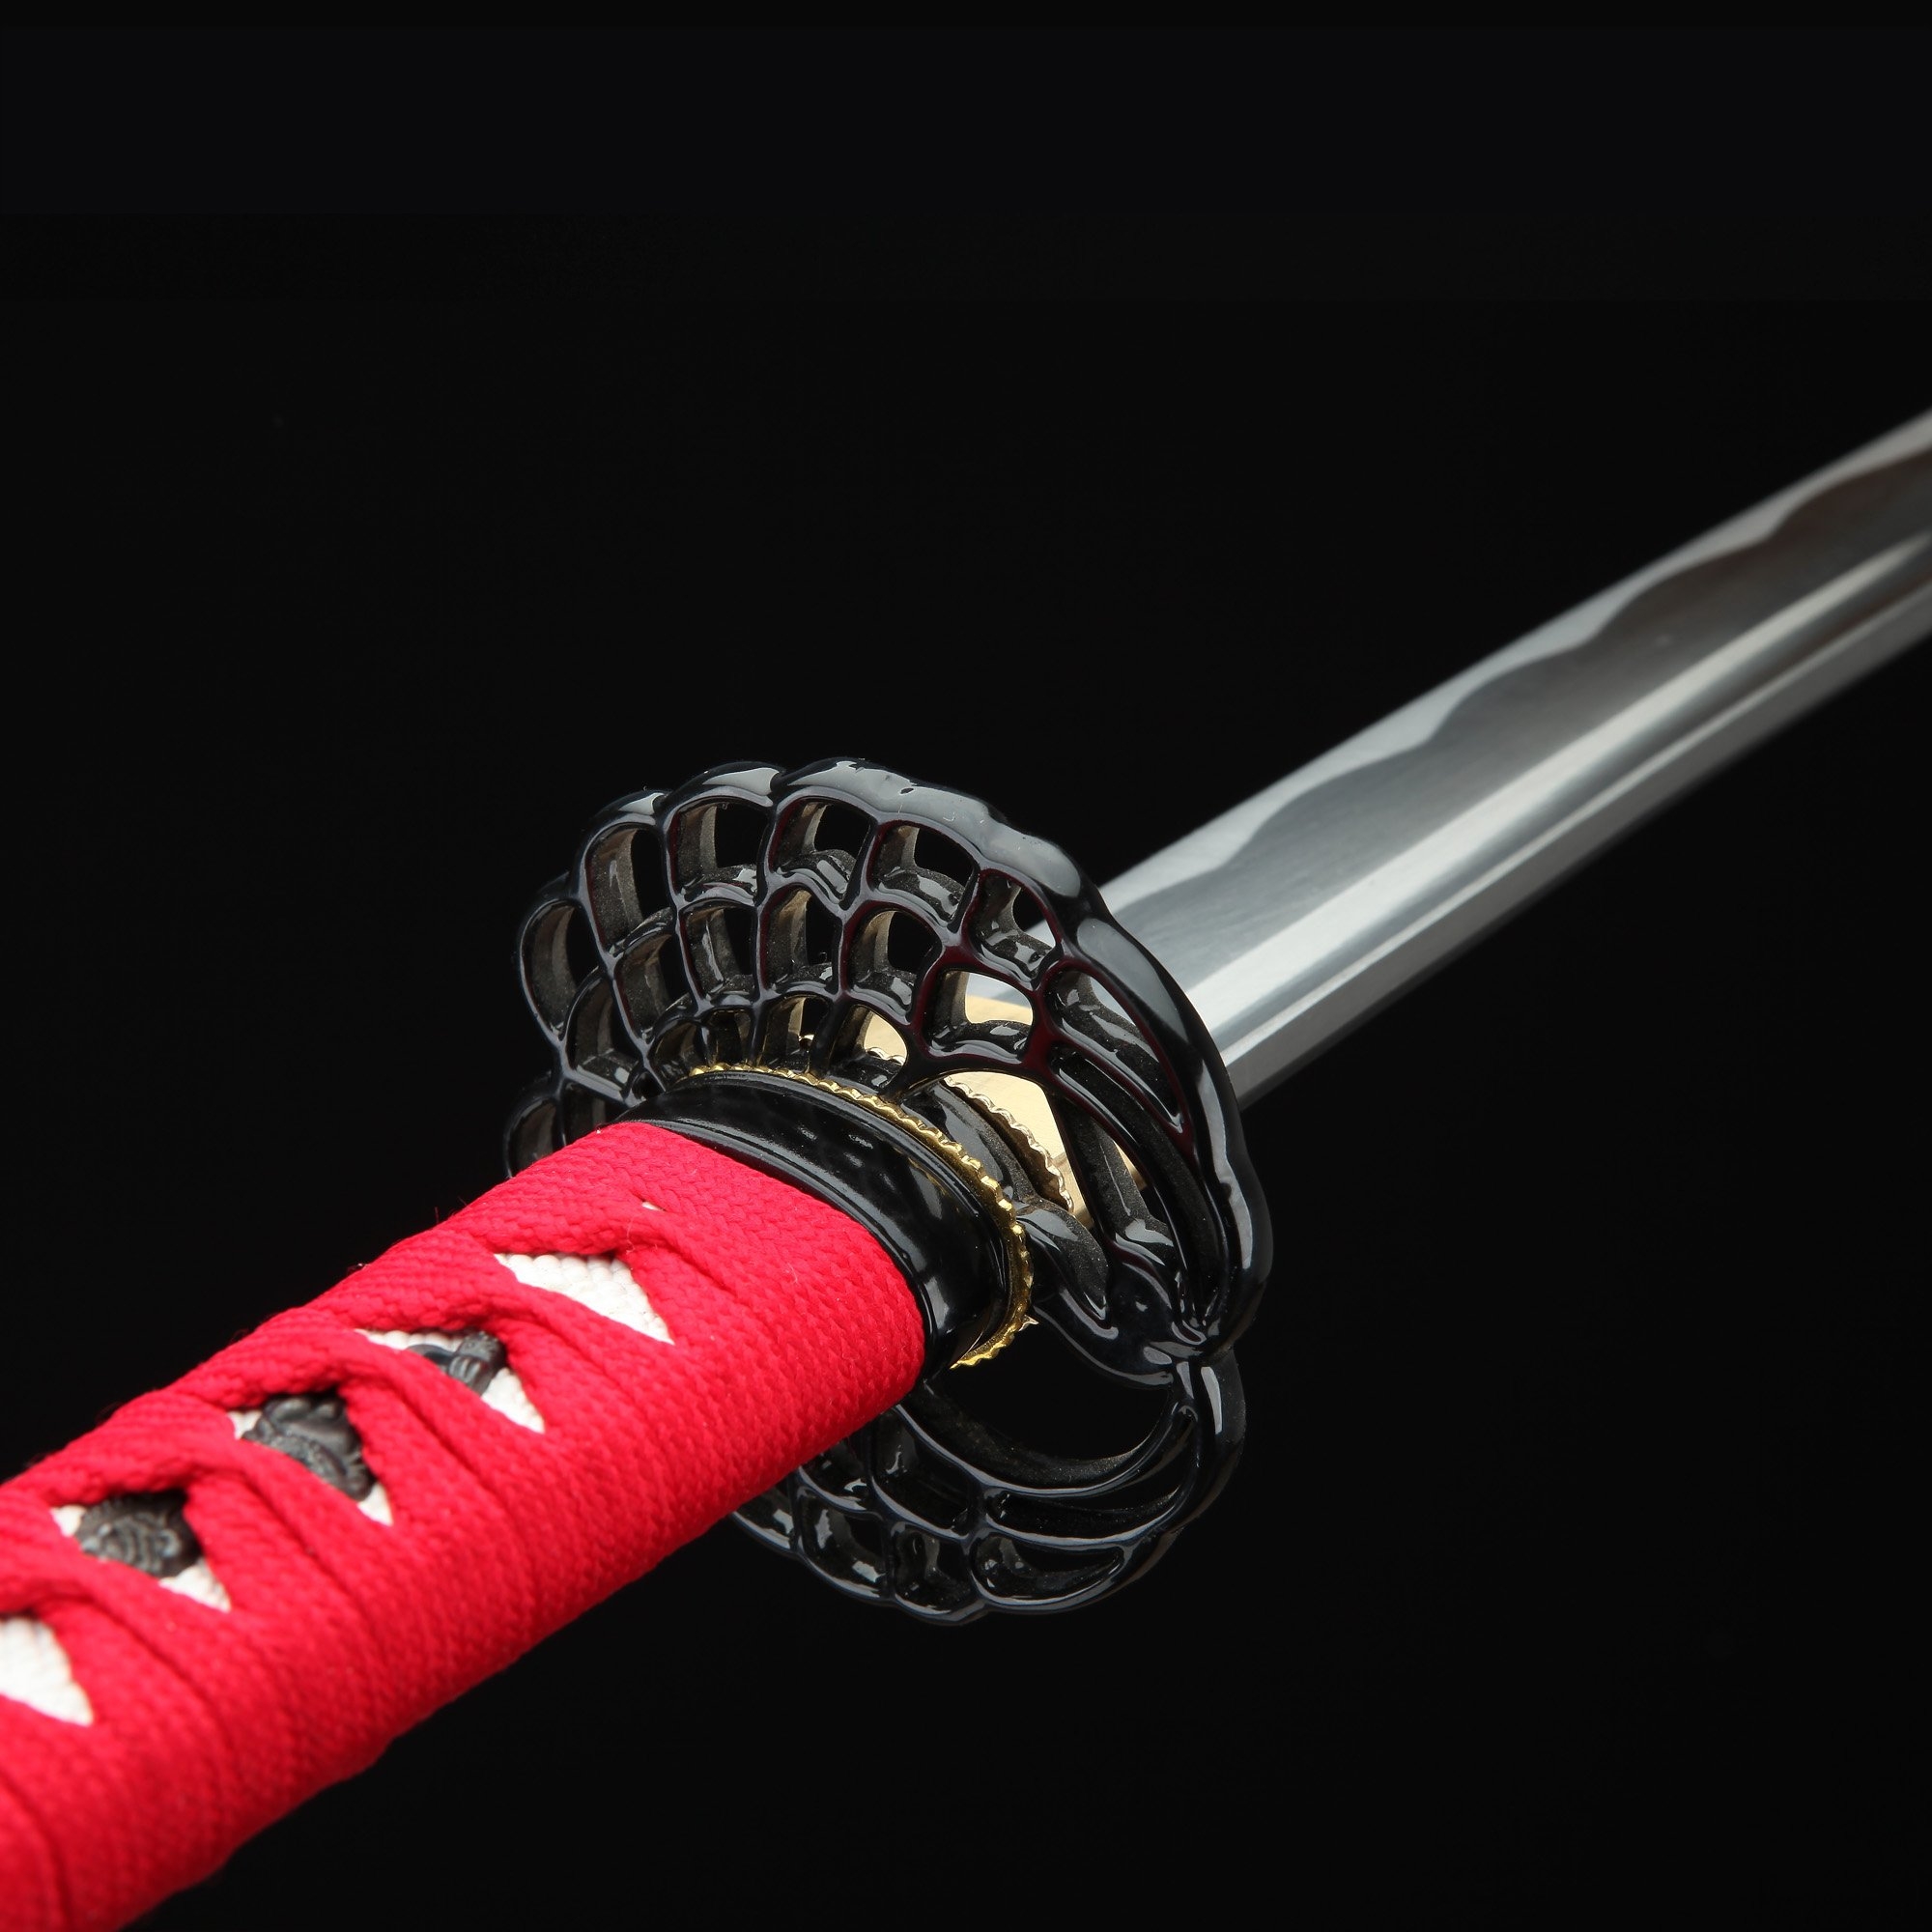  Red  Katana Handmade Real Japanese Samurai Swords  With Red  